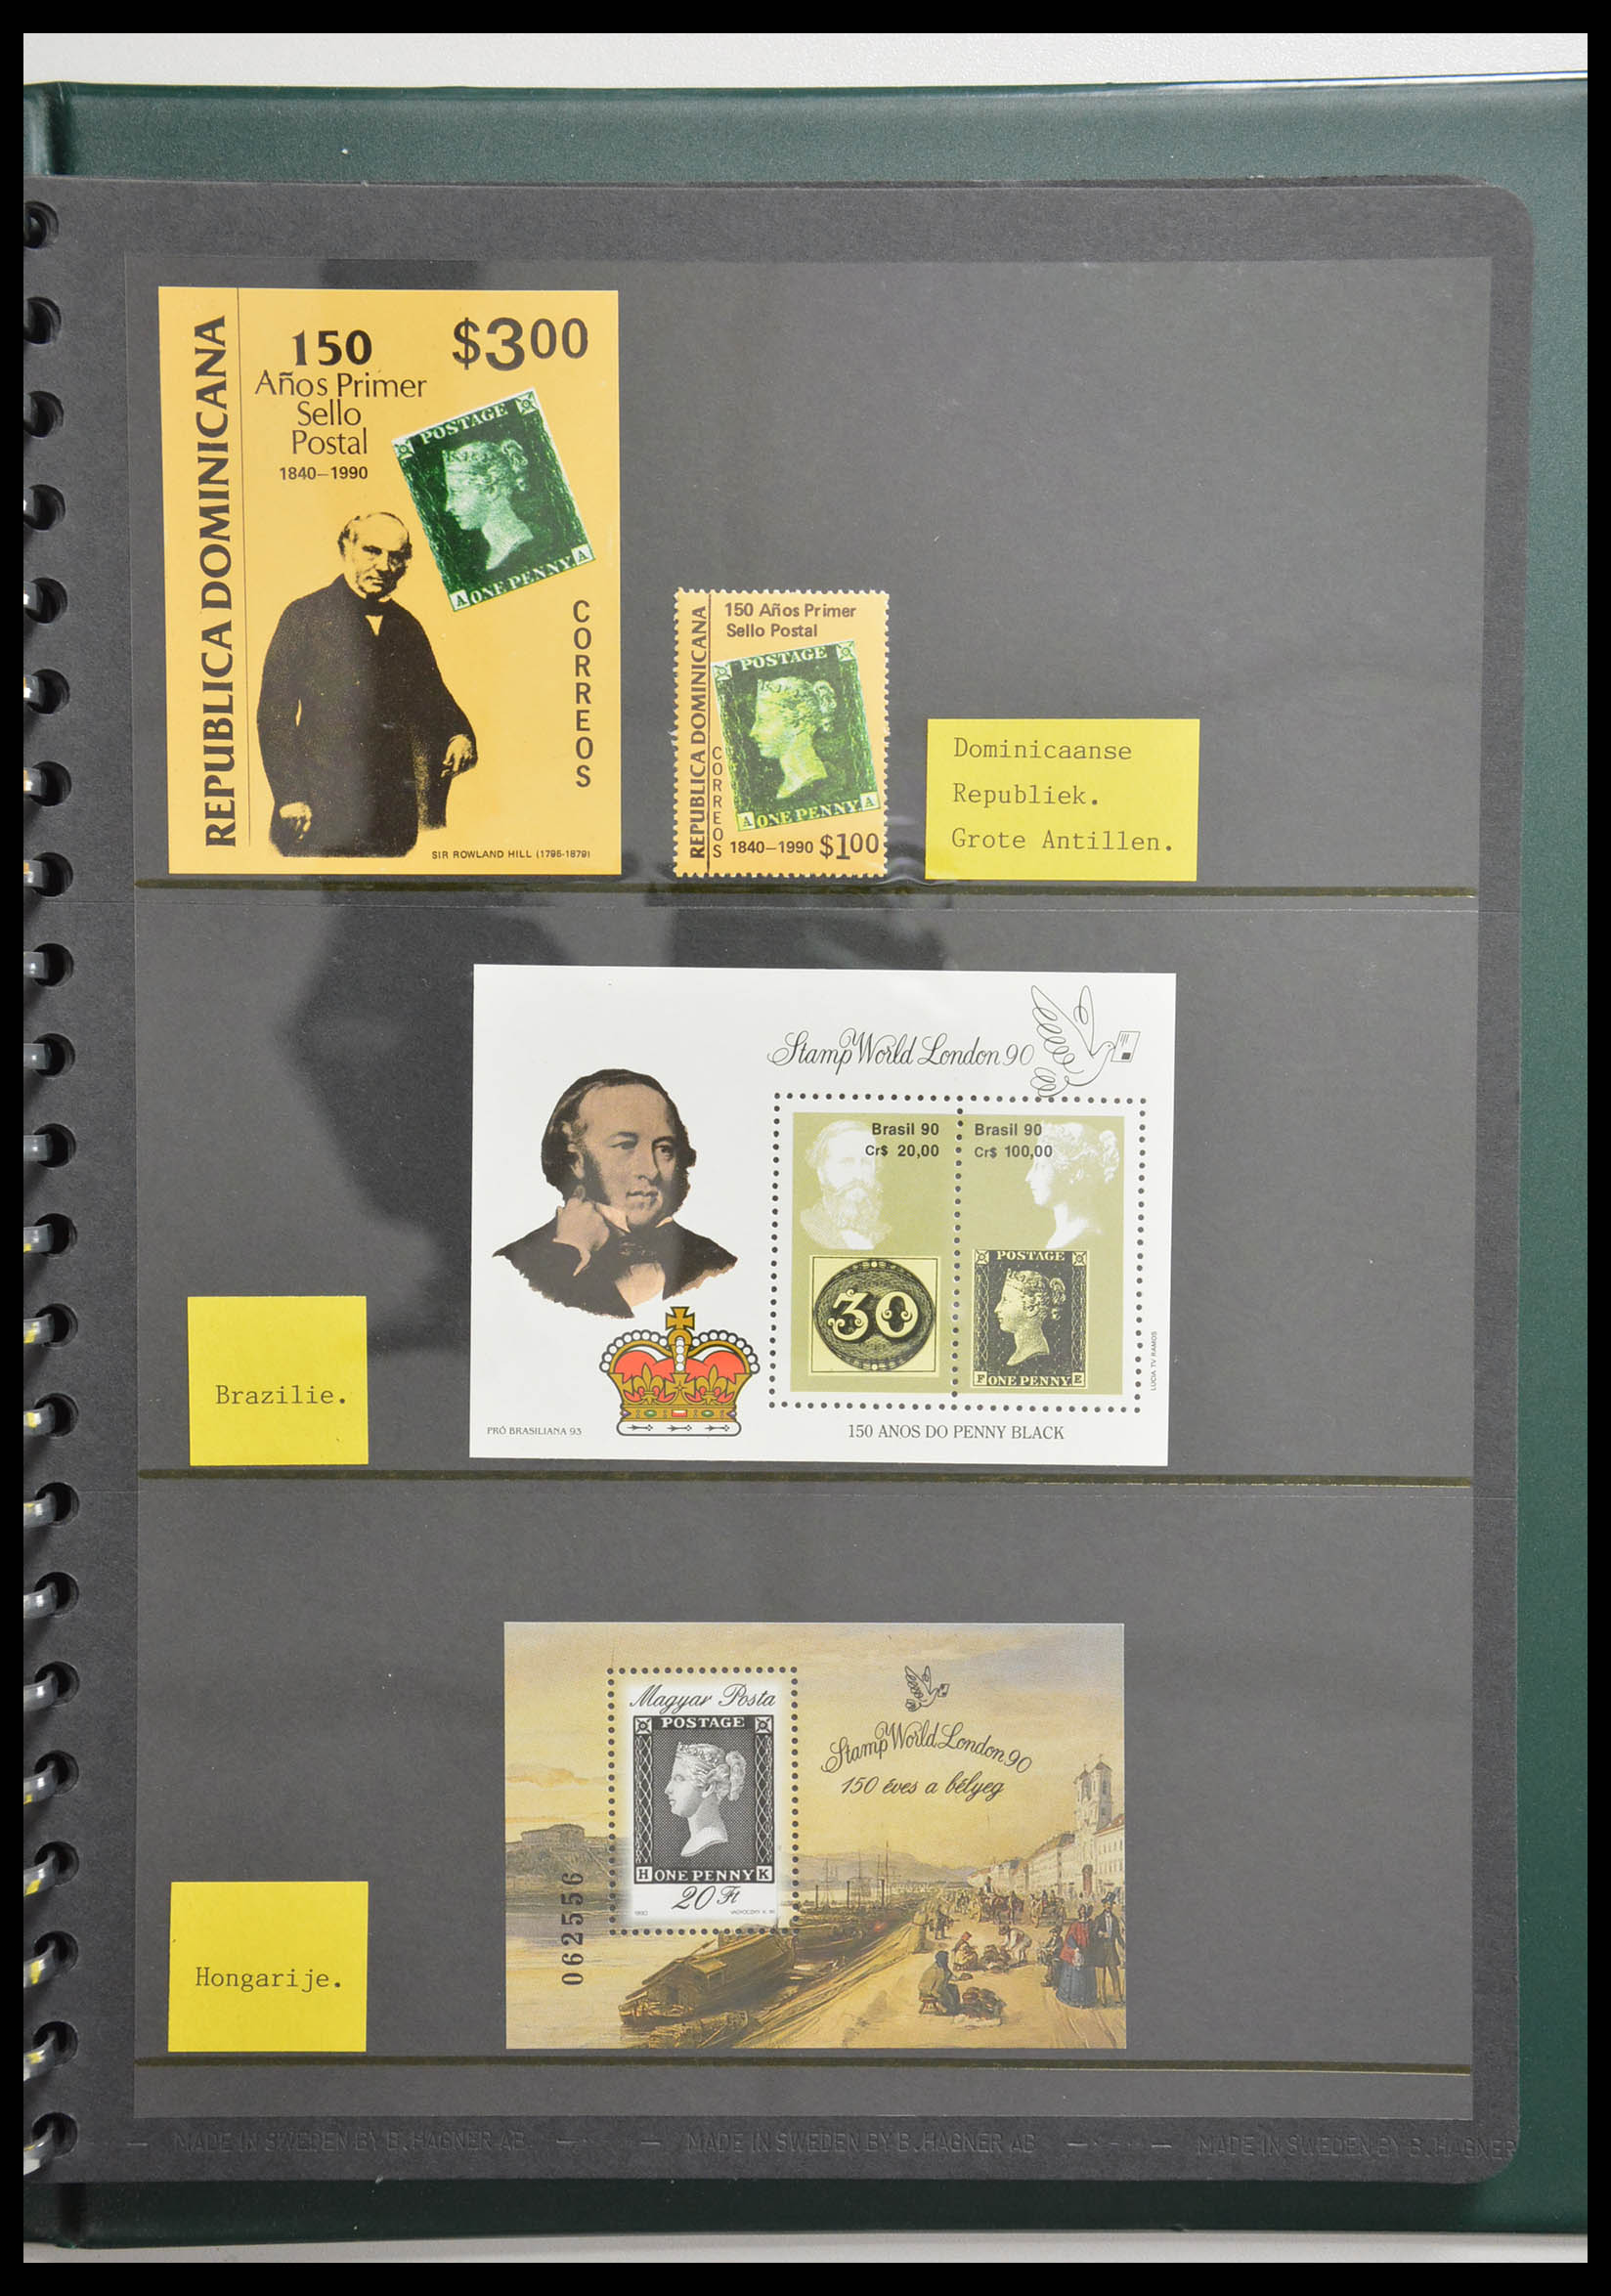 28337 042 - 28337 Postzegel op postzegel 1840-2001.